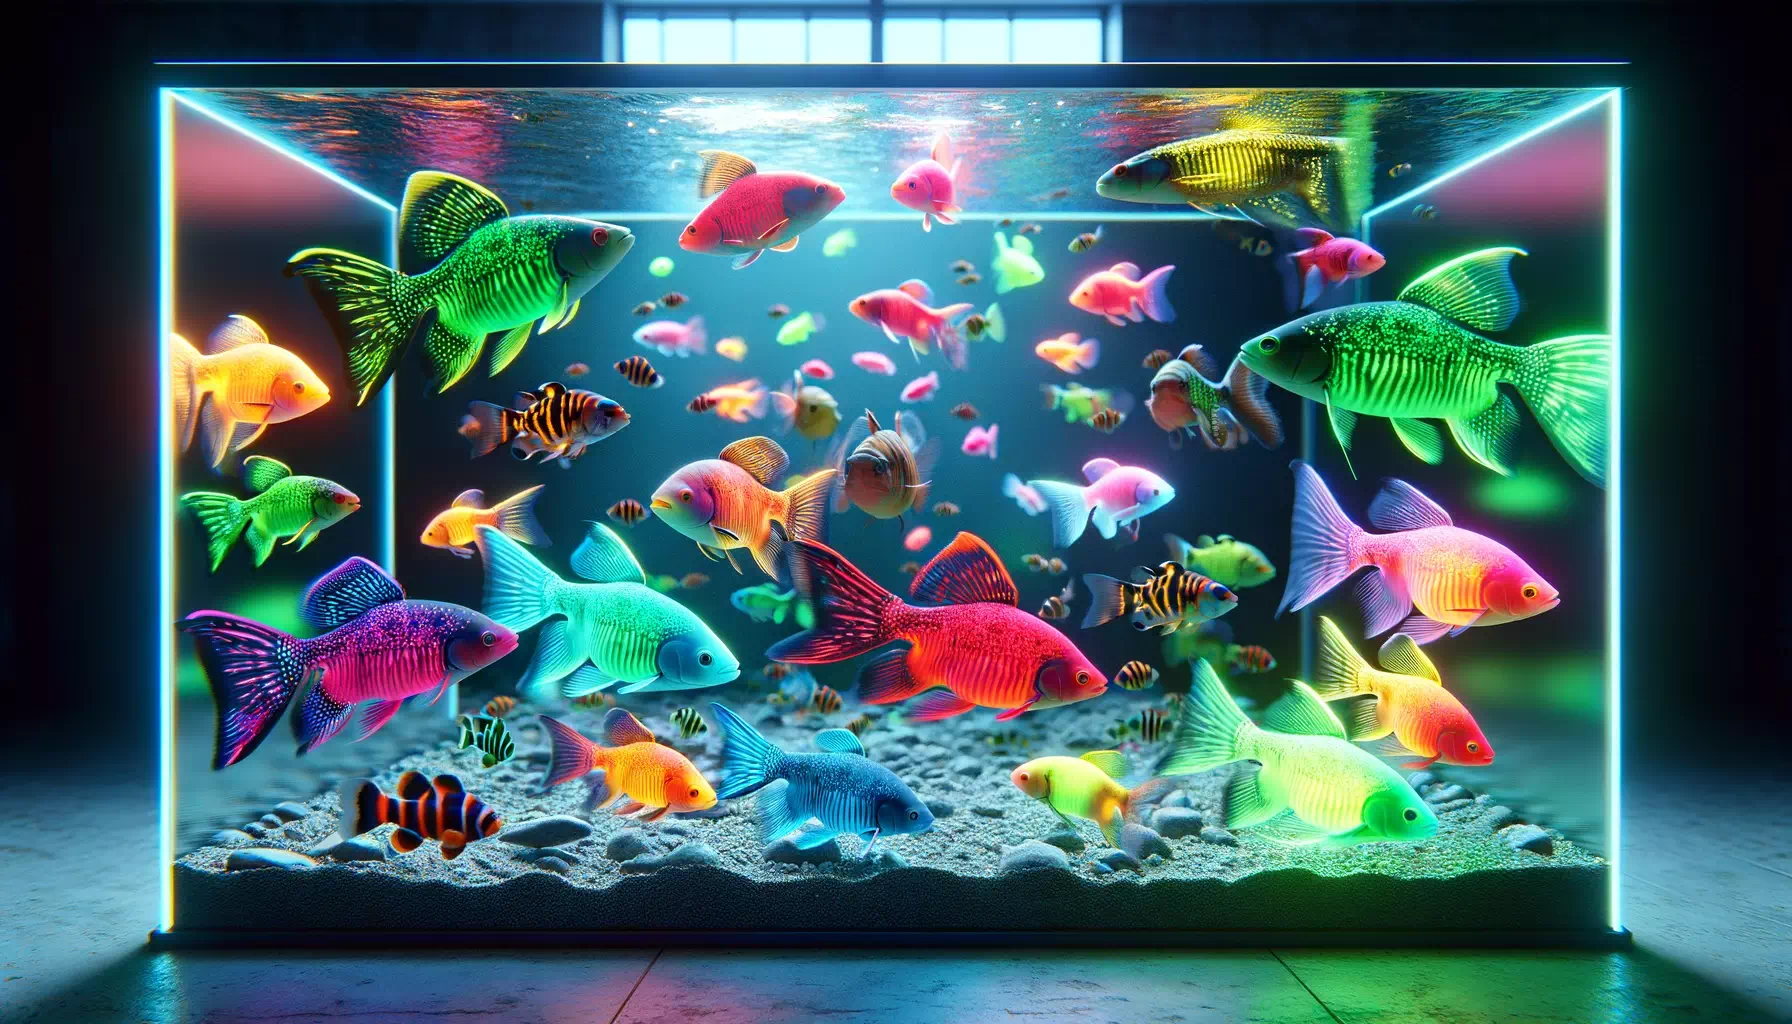 different species of GloFish in an aquarium setting. Display a variety of GloFish, ea